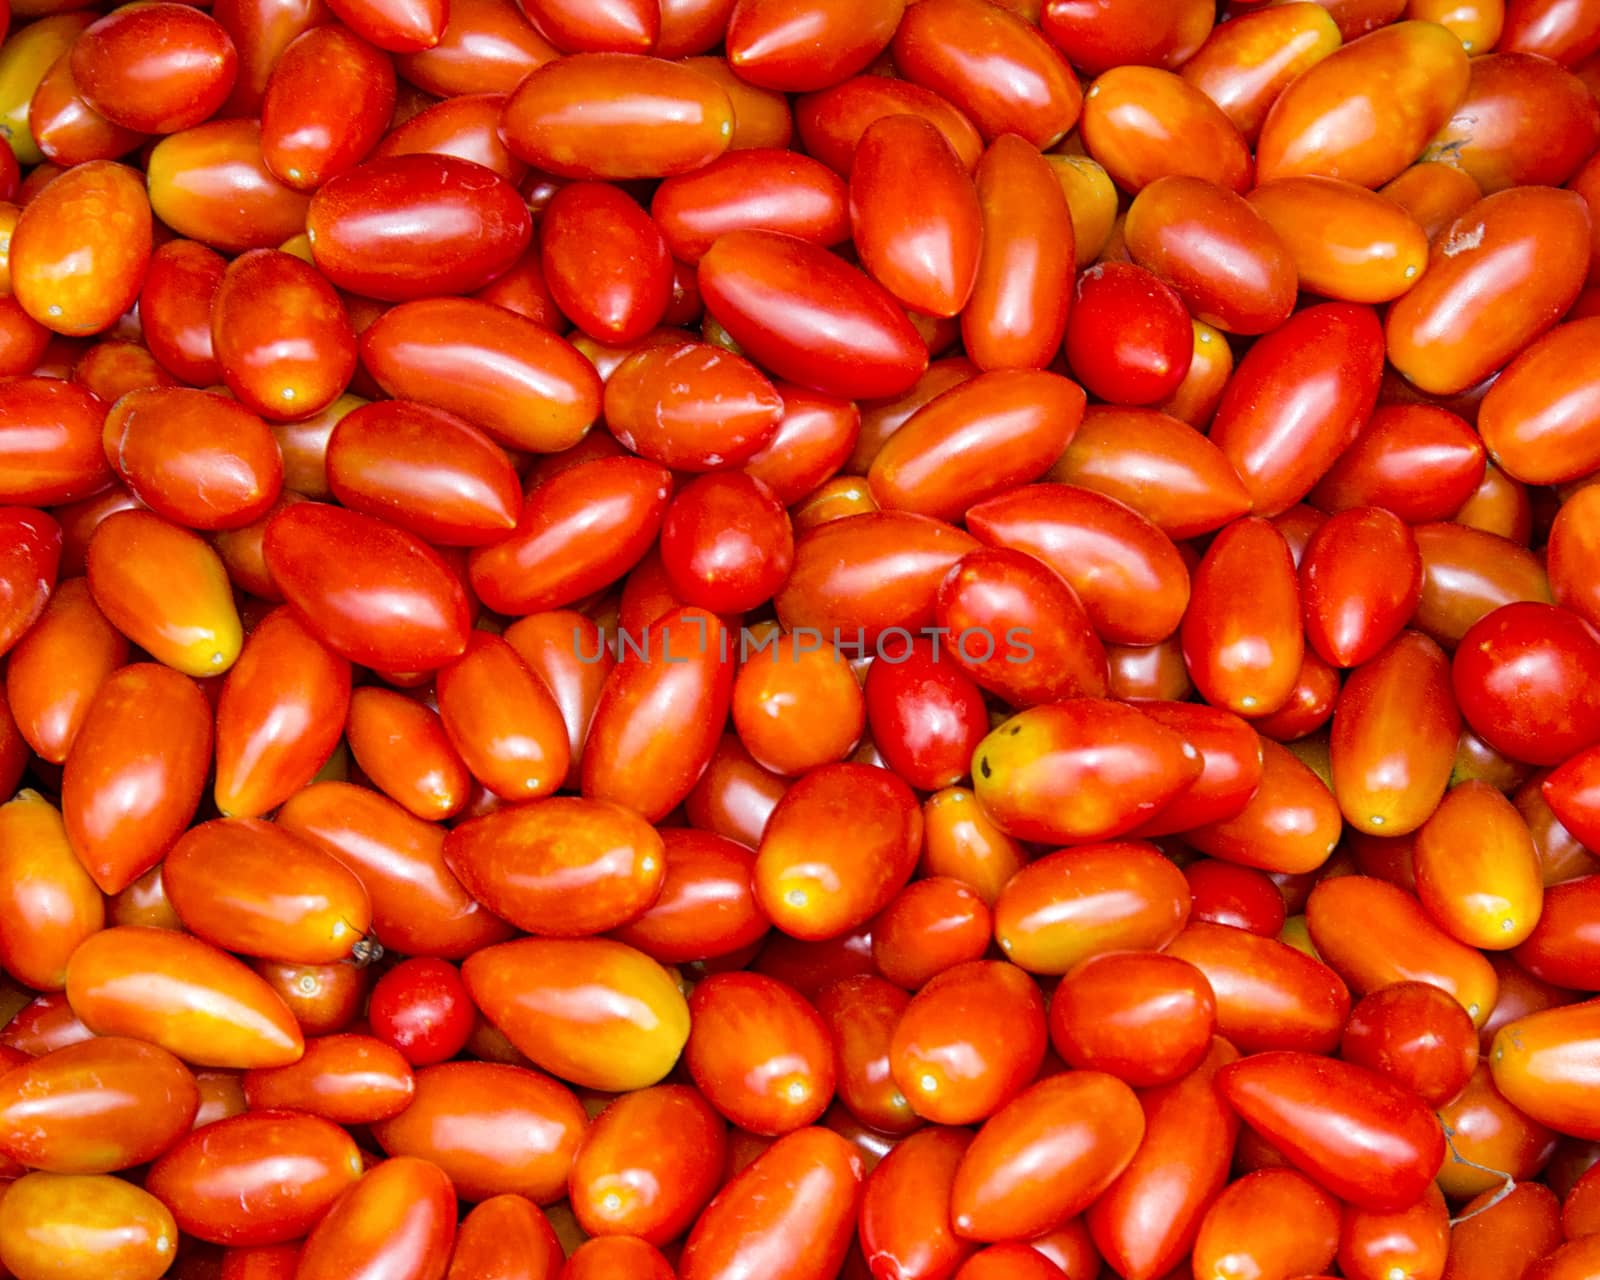 tomatoes by khellon